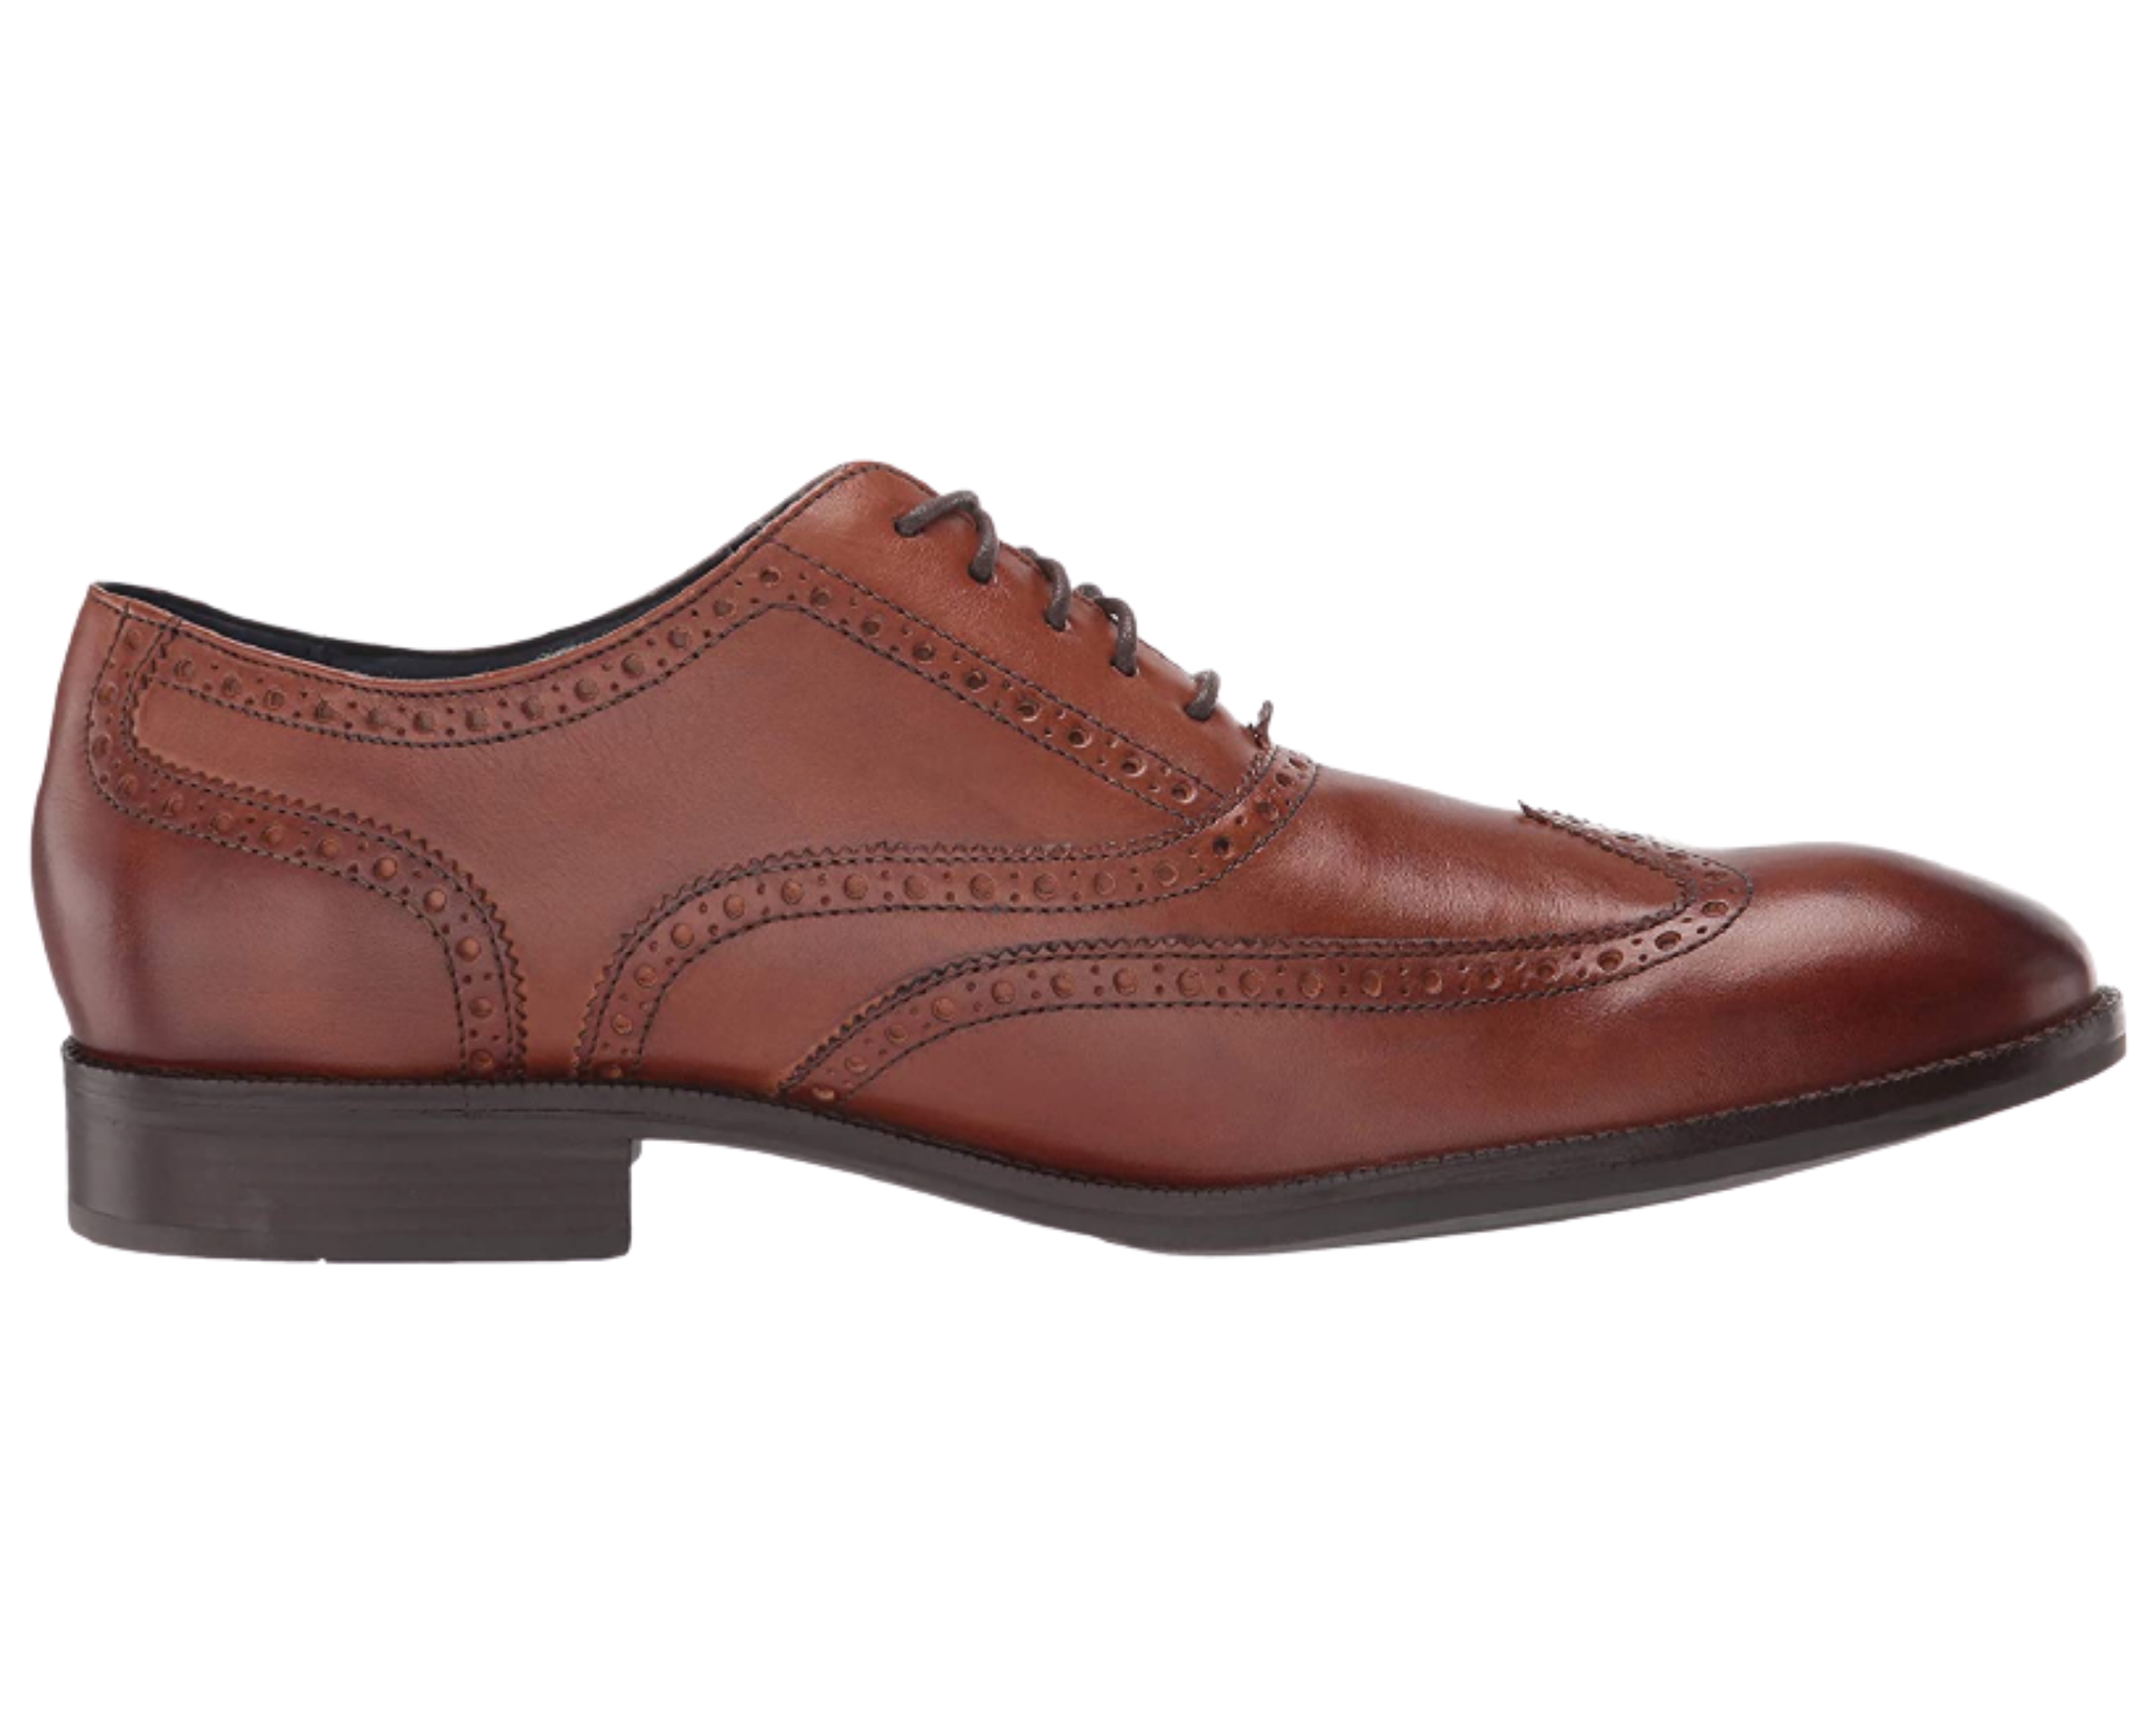 Best brown wingtip shoes for men